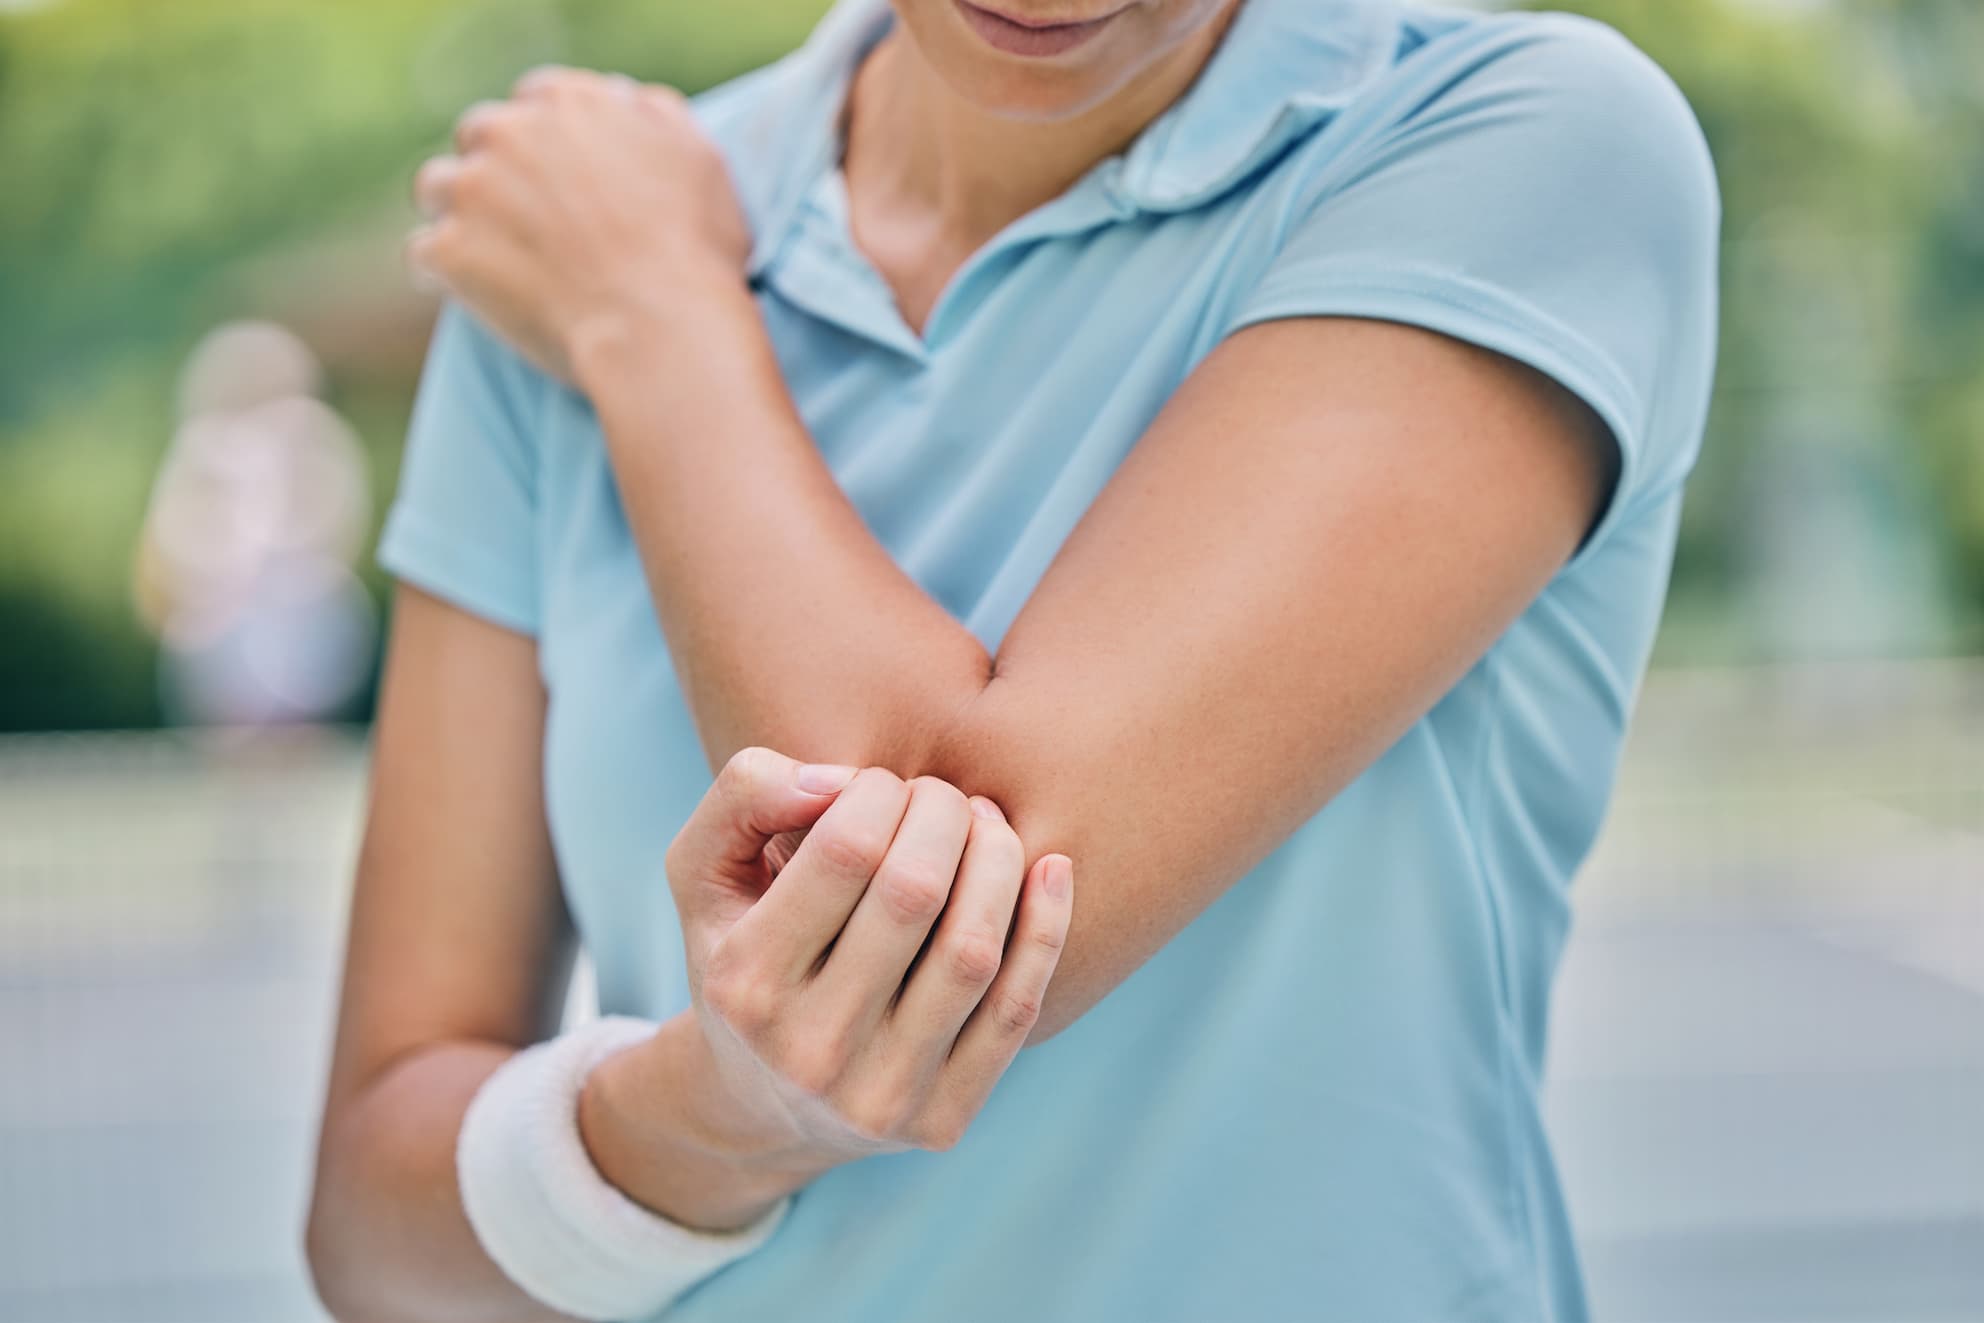 tennis elbow pain